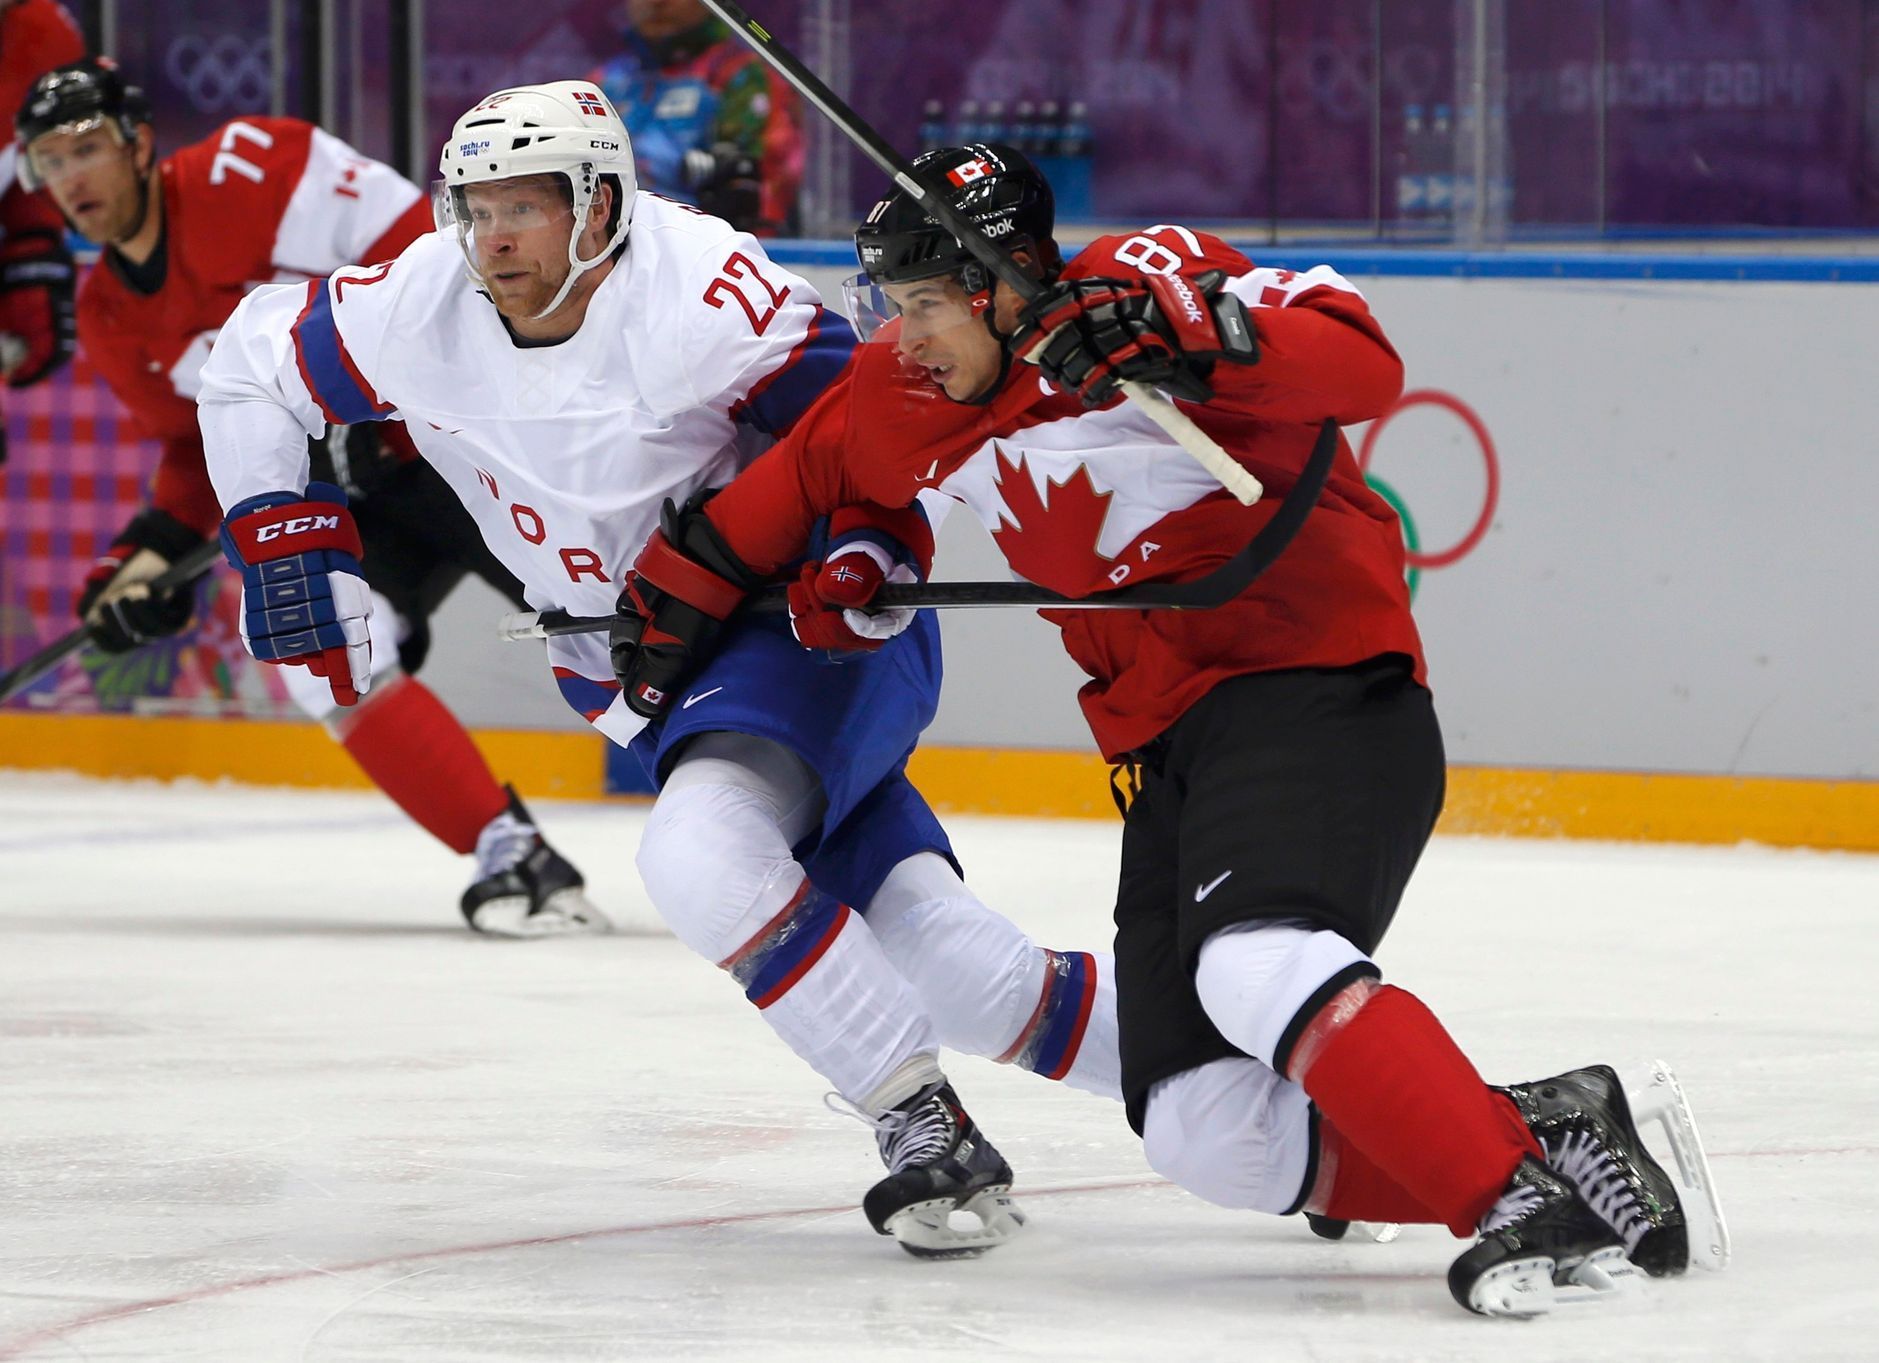 Kanada - Norsko: Sidney Crosby - Martin Roymark (22)